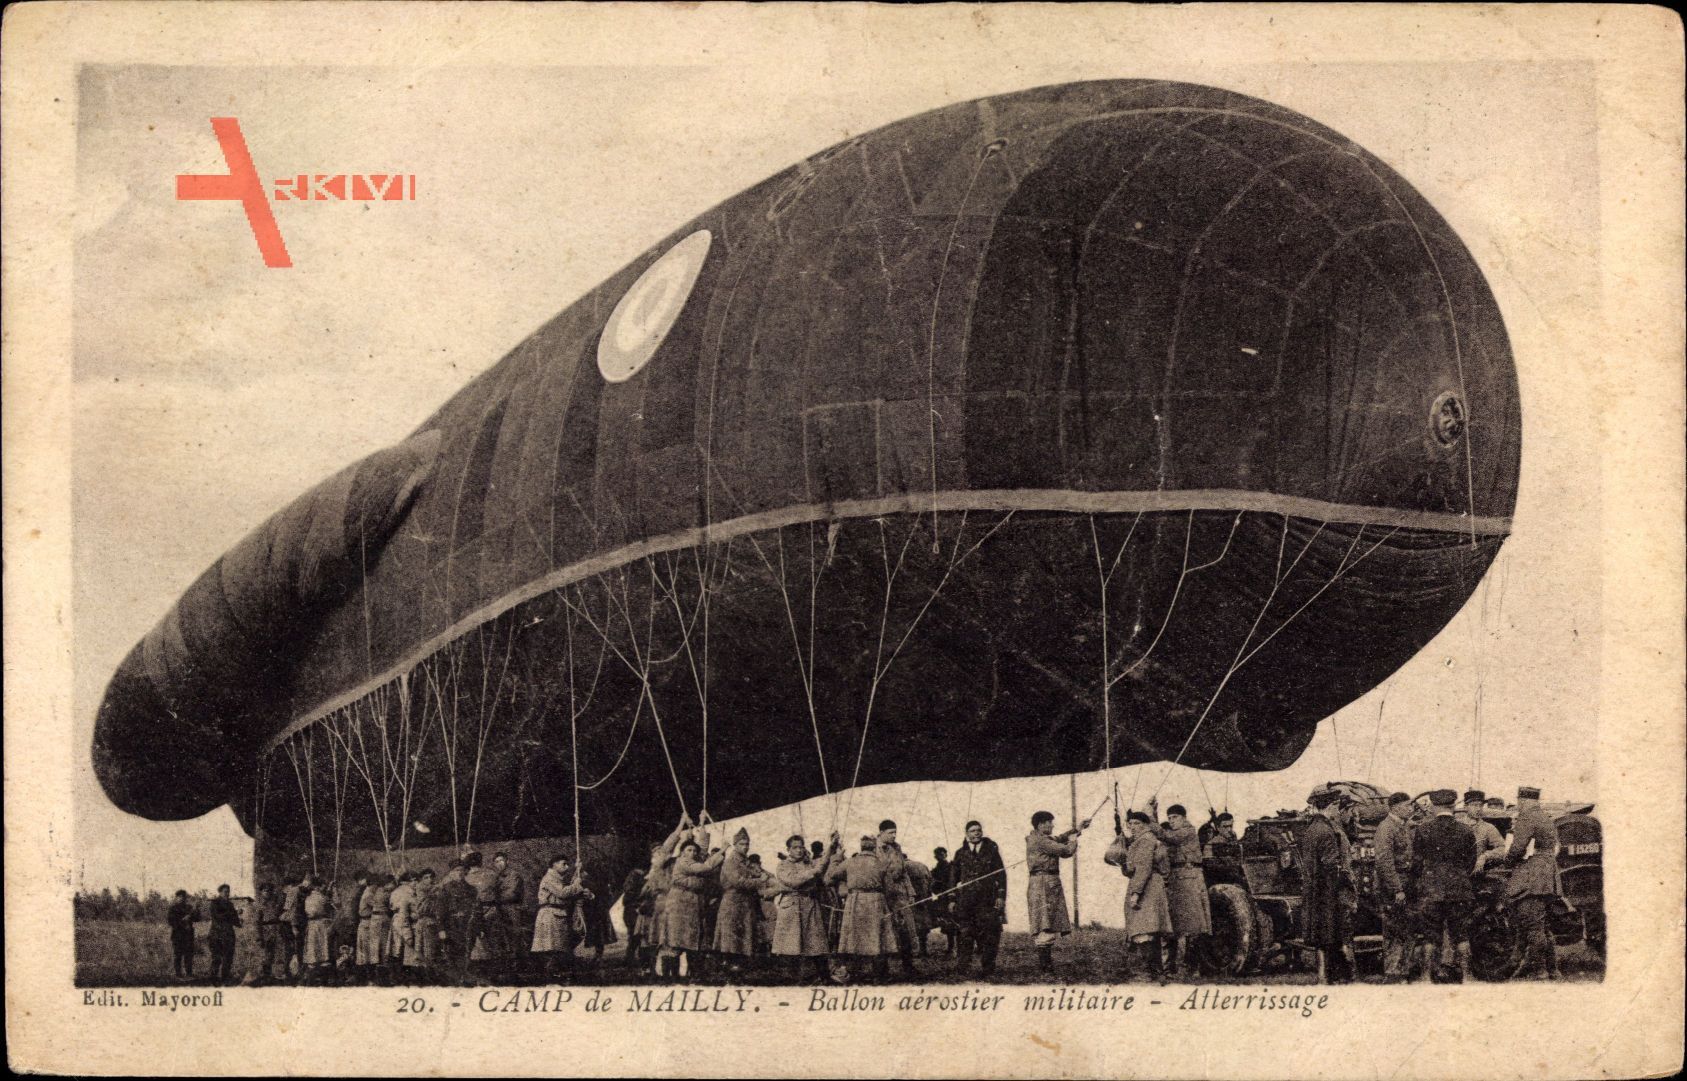 Camp de Mailly, Ballon aérostier militaire, Atterrissage, Militärballon